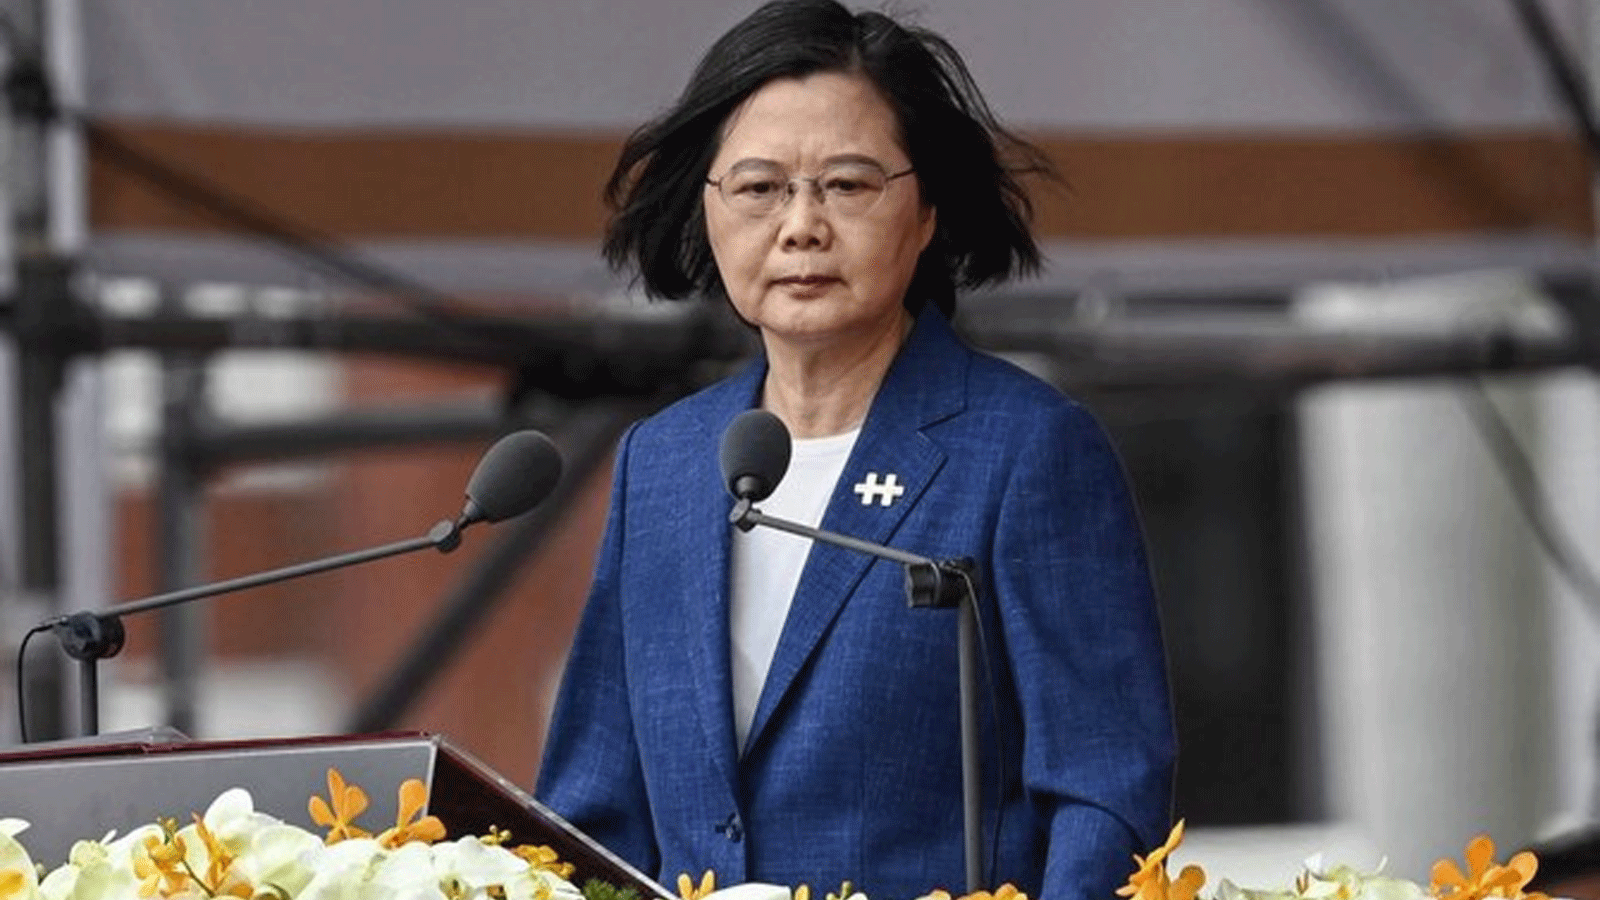 رئيسة تايوان تساي إنغ ون